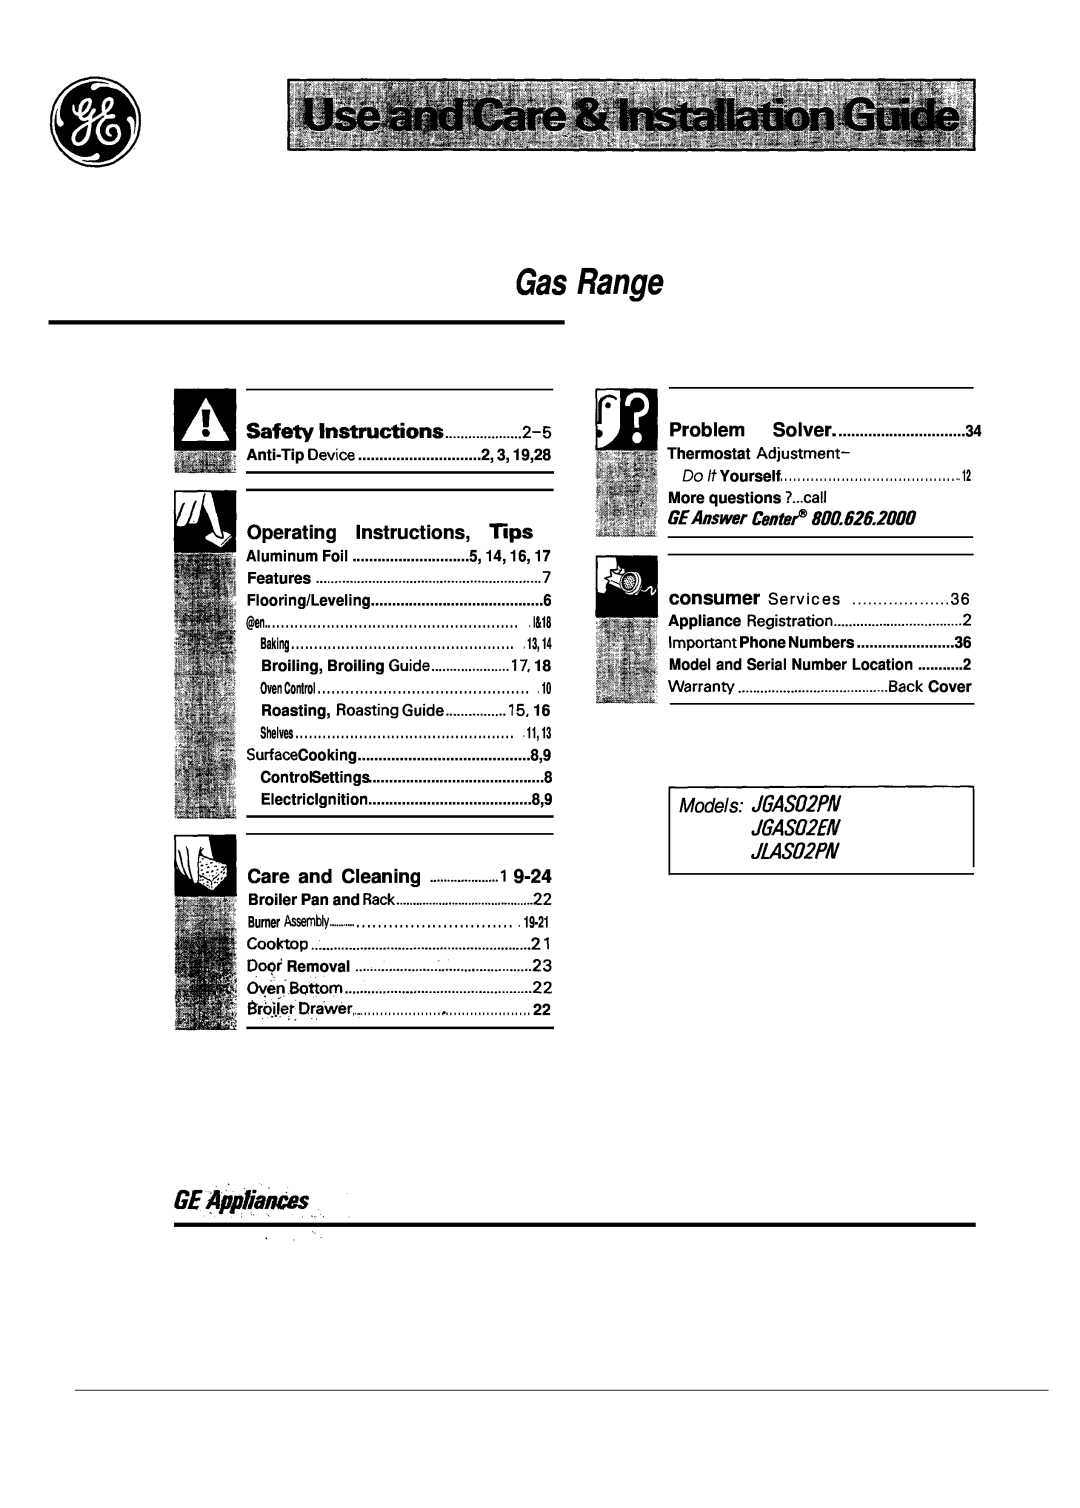 GE manual Gas Range, Models JGAS02PN JGAS02EN JMS02PN, Operating Instructions, Ttps, GEAnswer Cente~ 80~626.2000 